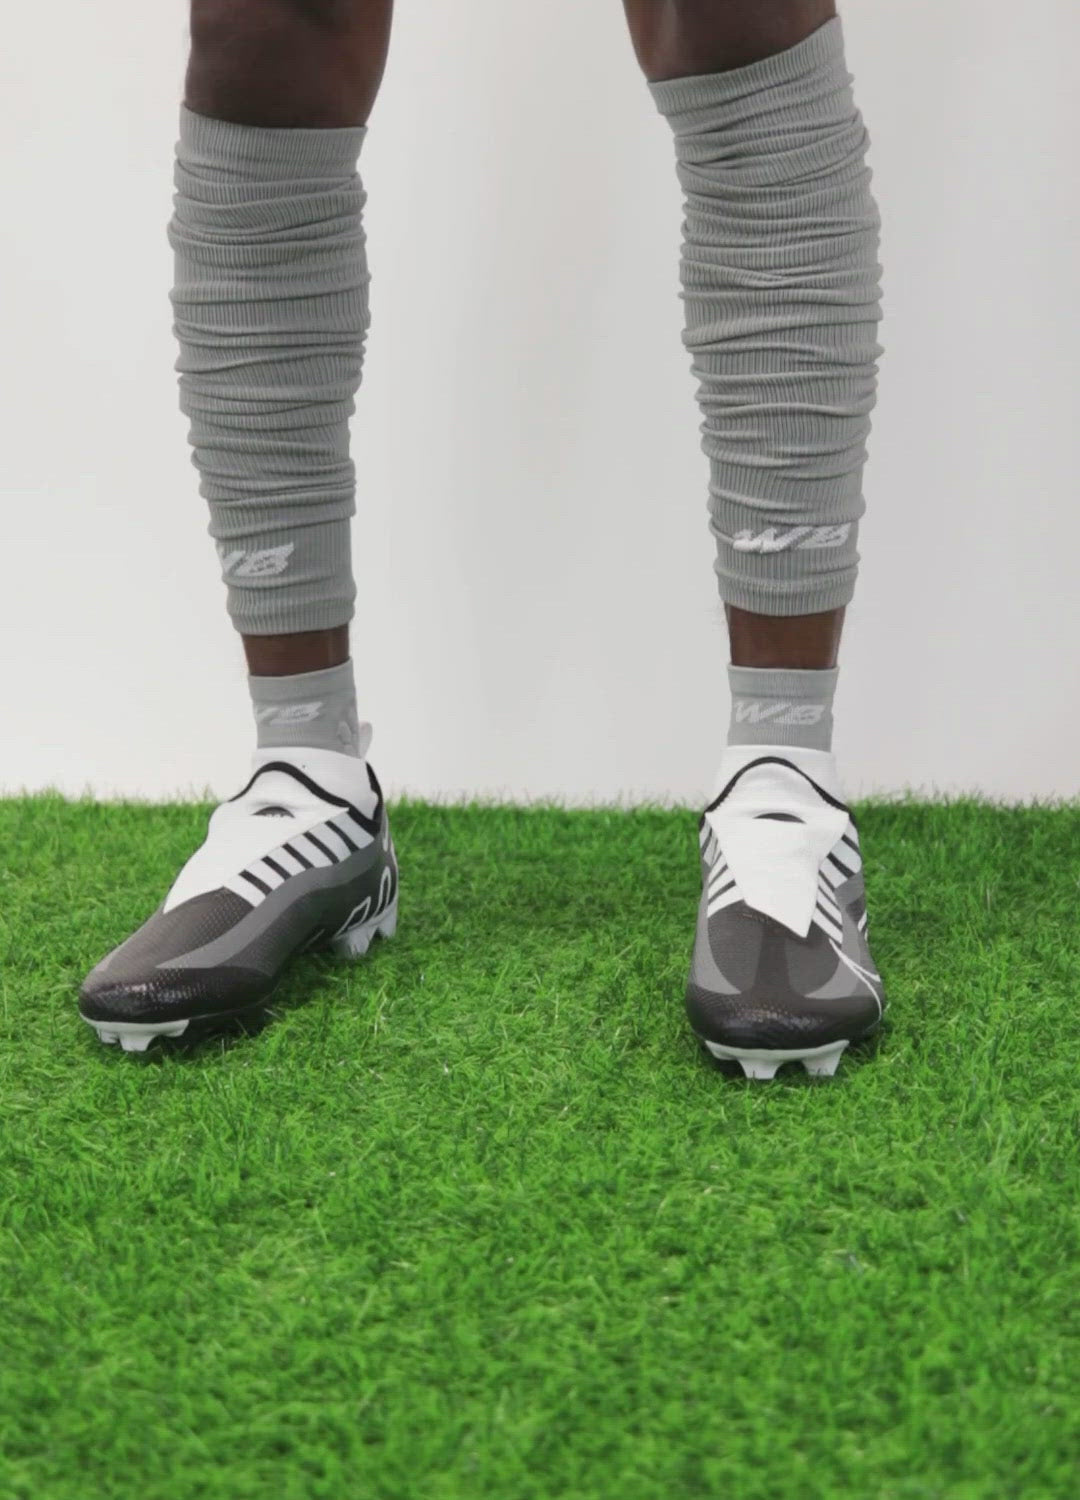 Adidas Men's Football Single Leg Sleeve White Gray Size Large (Just one)